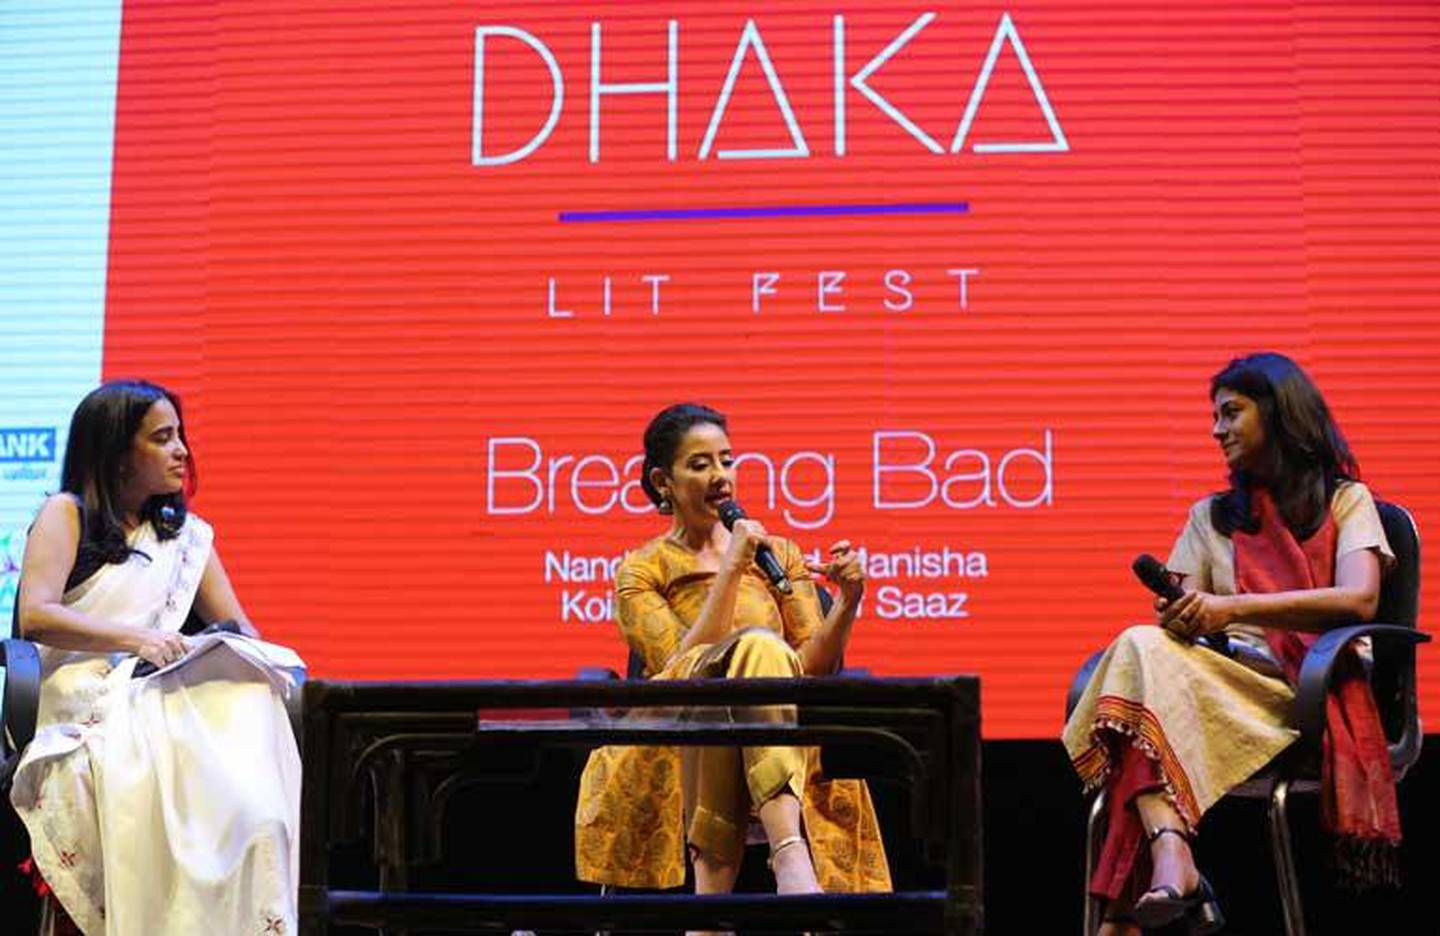 Nandita Das (right) at Dhaka Lit Fest 